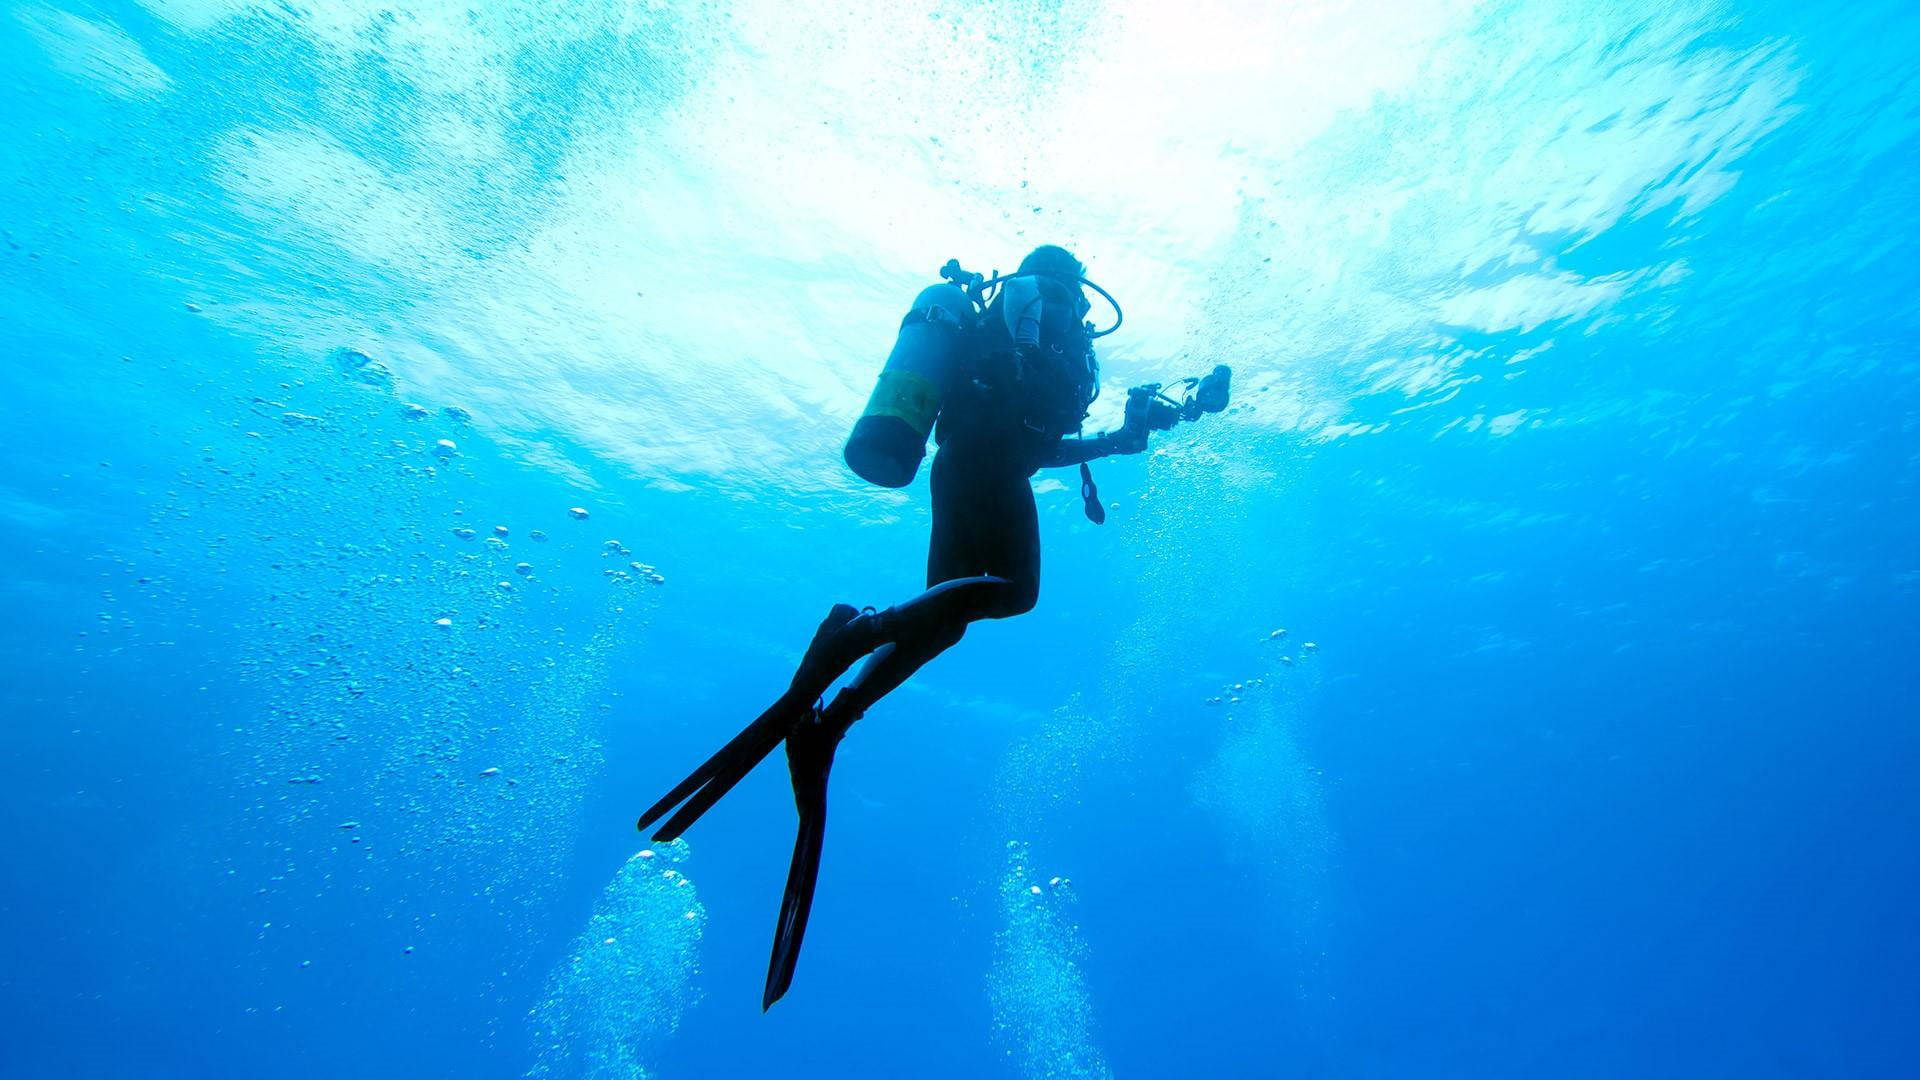 Scuba Diving Photos Download The BEST Free Scuba Diving Stock Photos  HD  Images